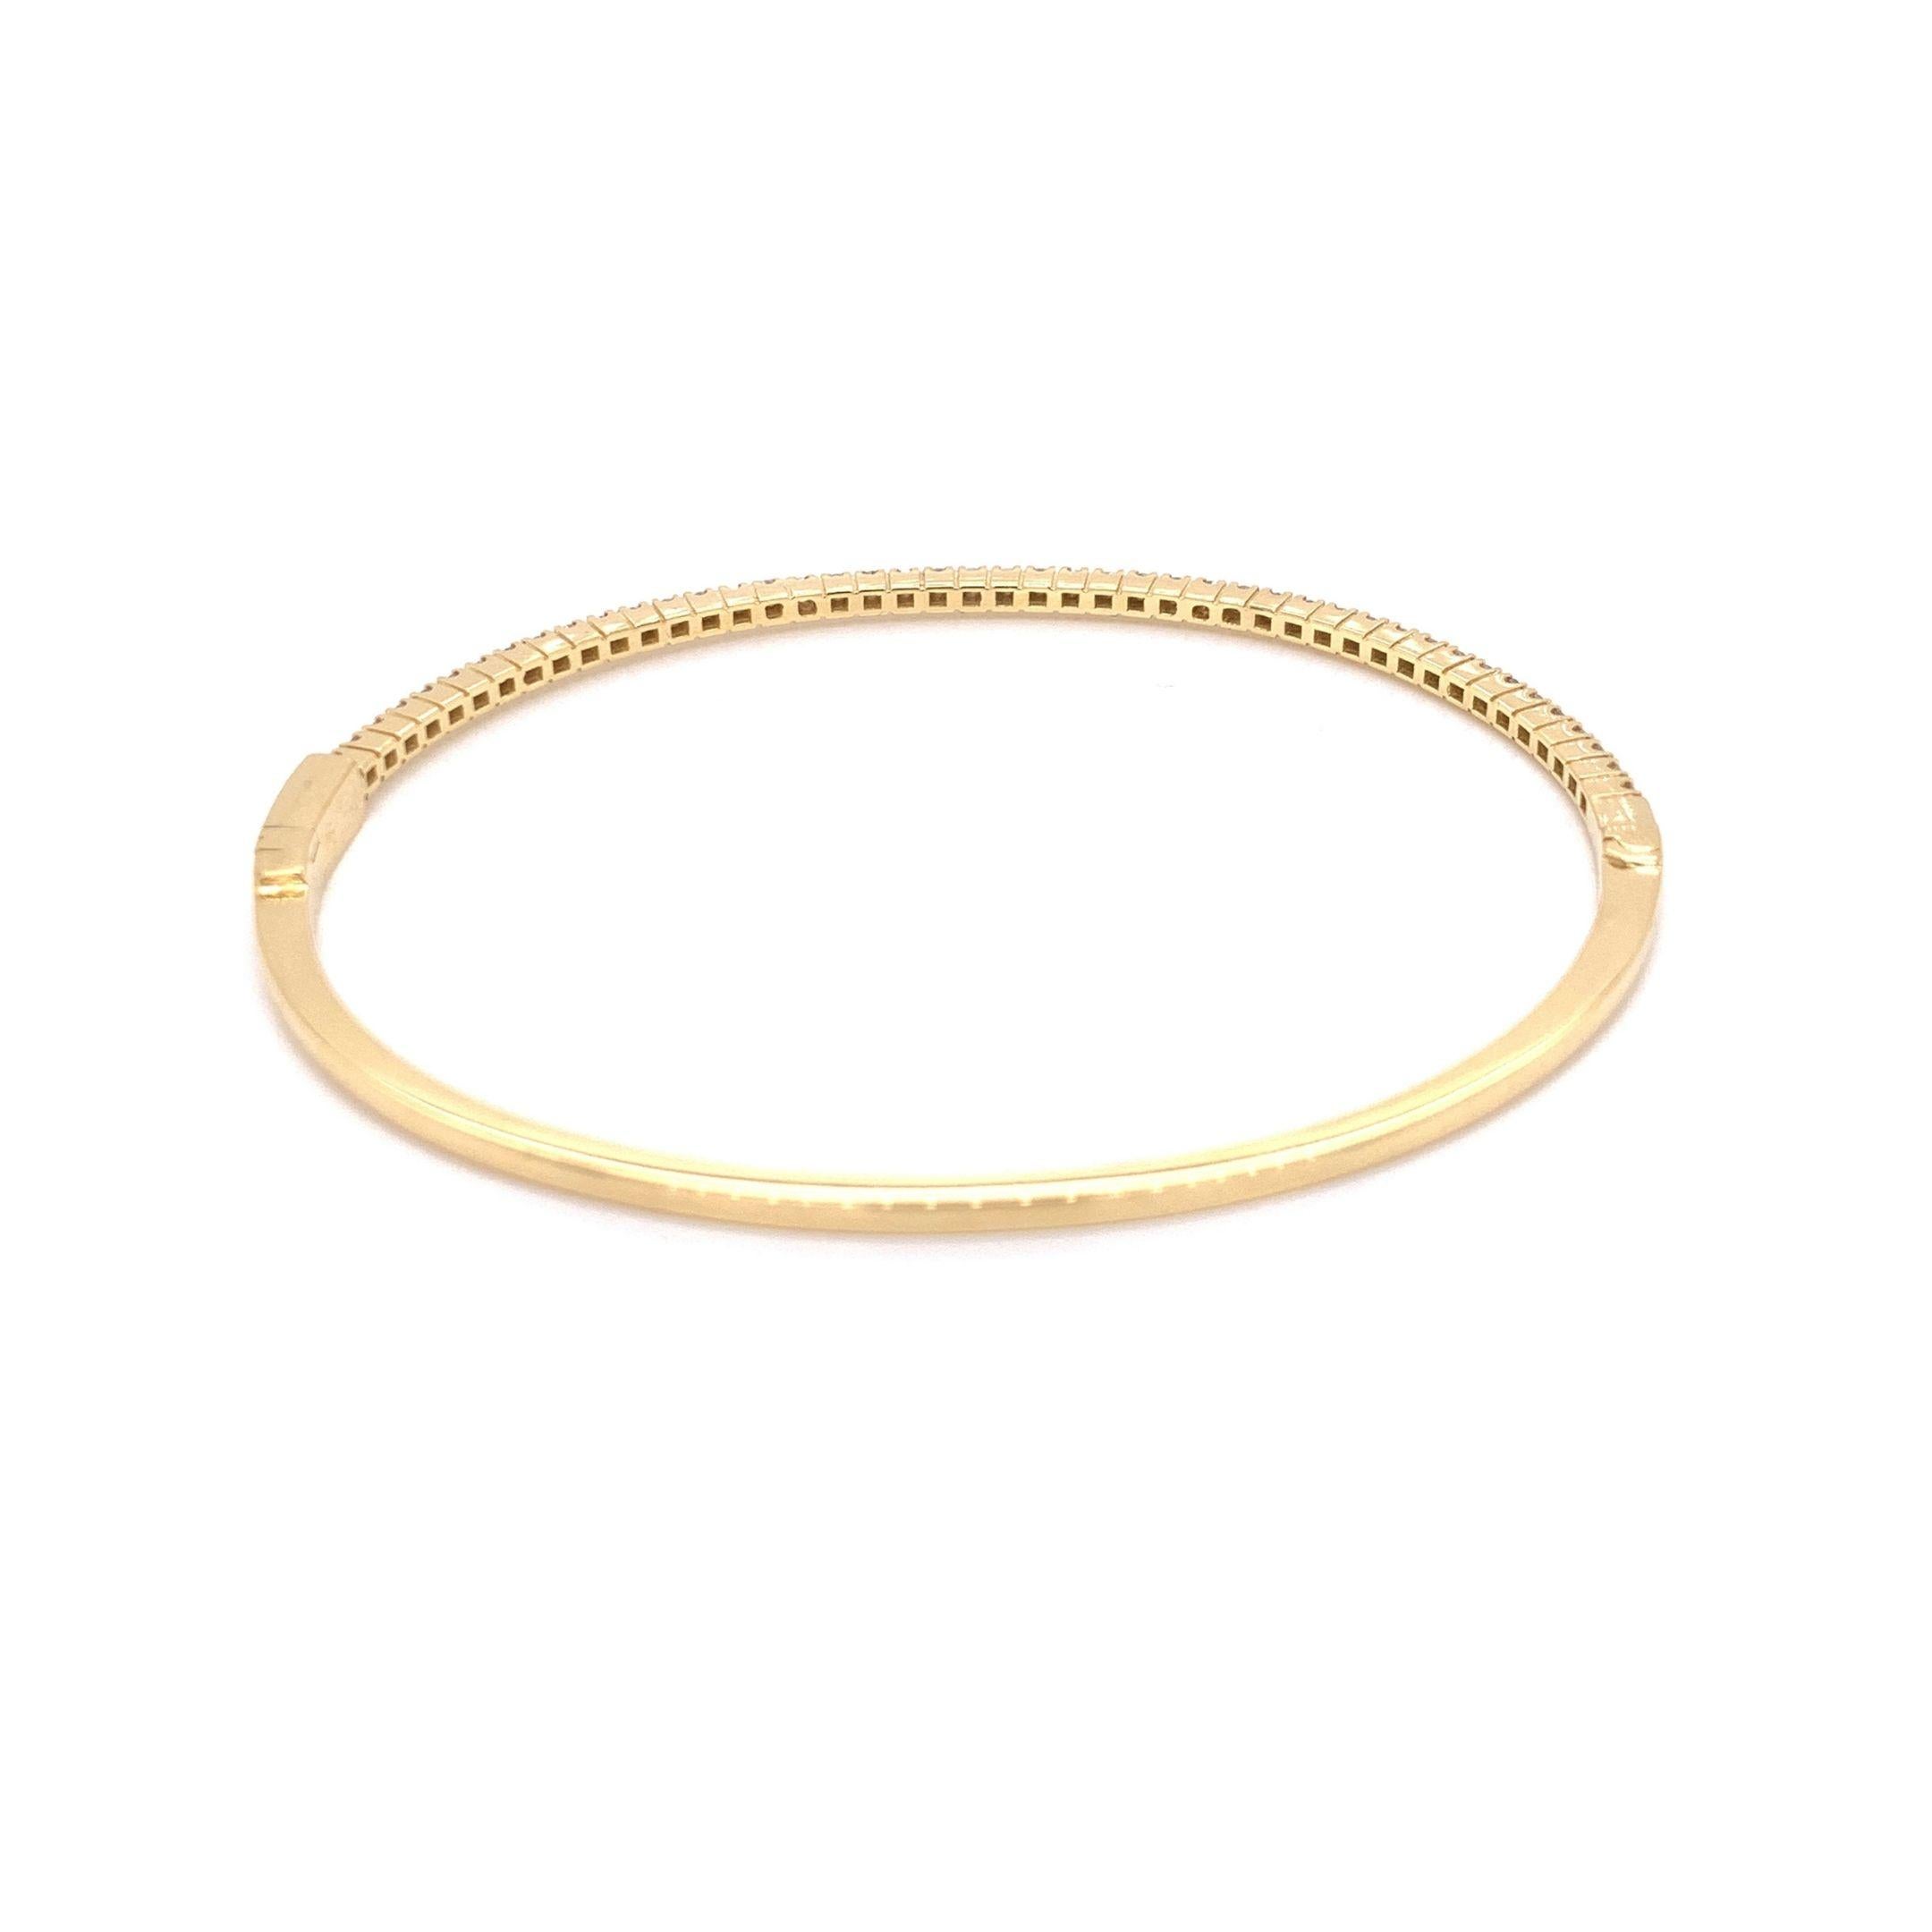 Bangle Diamond Half Tennis bracelet made with real/natural brilliant cut diamonds. Diamond Weight: 0.59 carats, Diamond Quantity: 45 (round diamonds), Color: G-H, Clarity: VS. Mounted on 18 karat yellow gold.